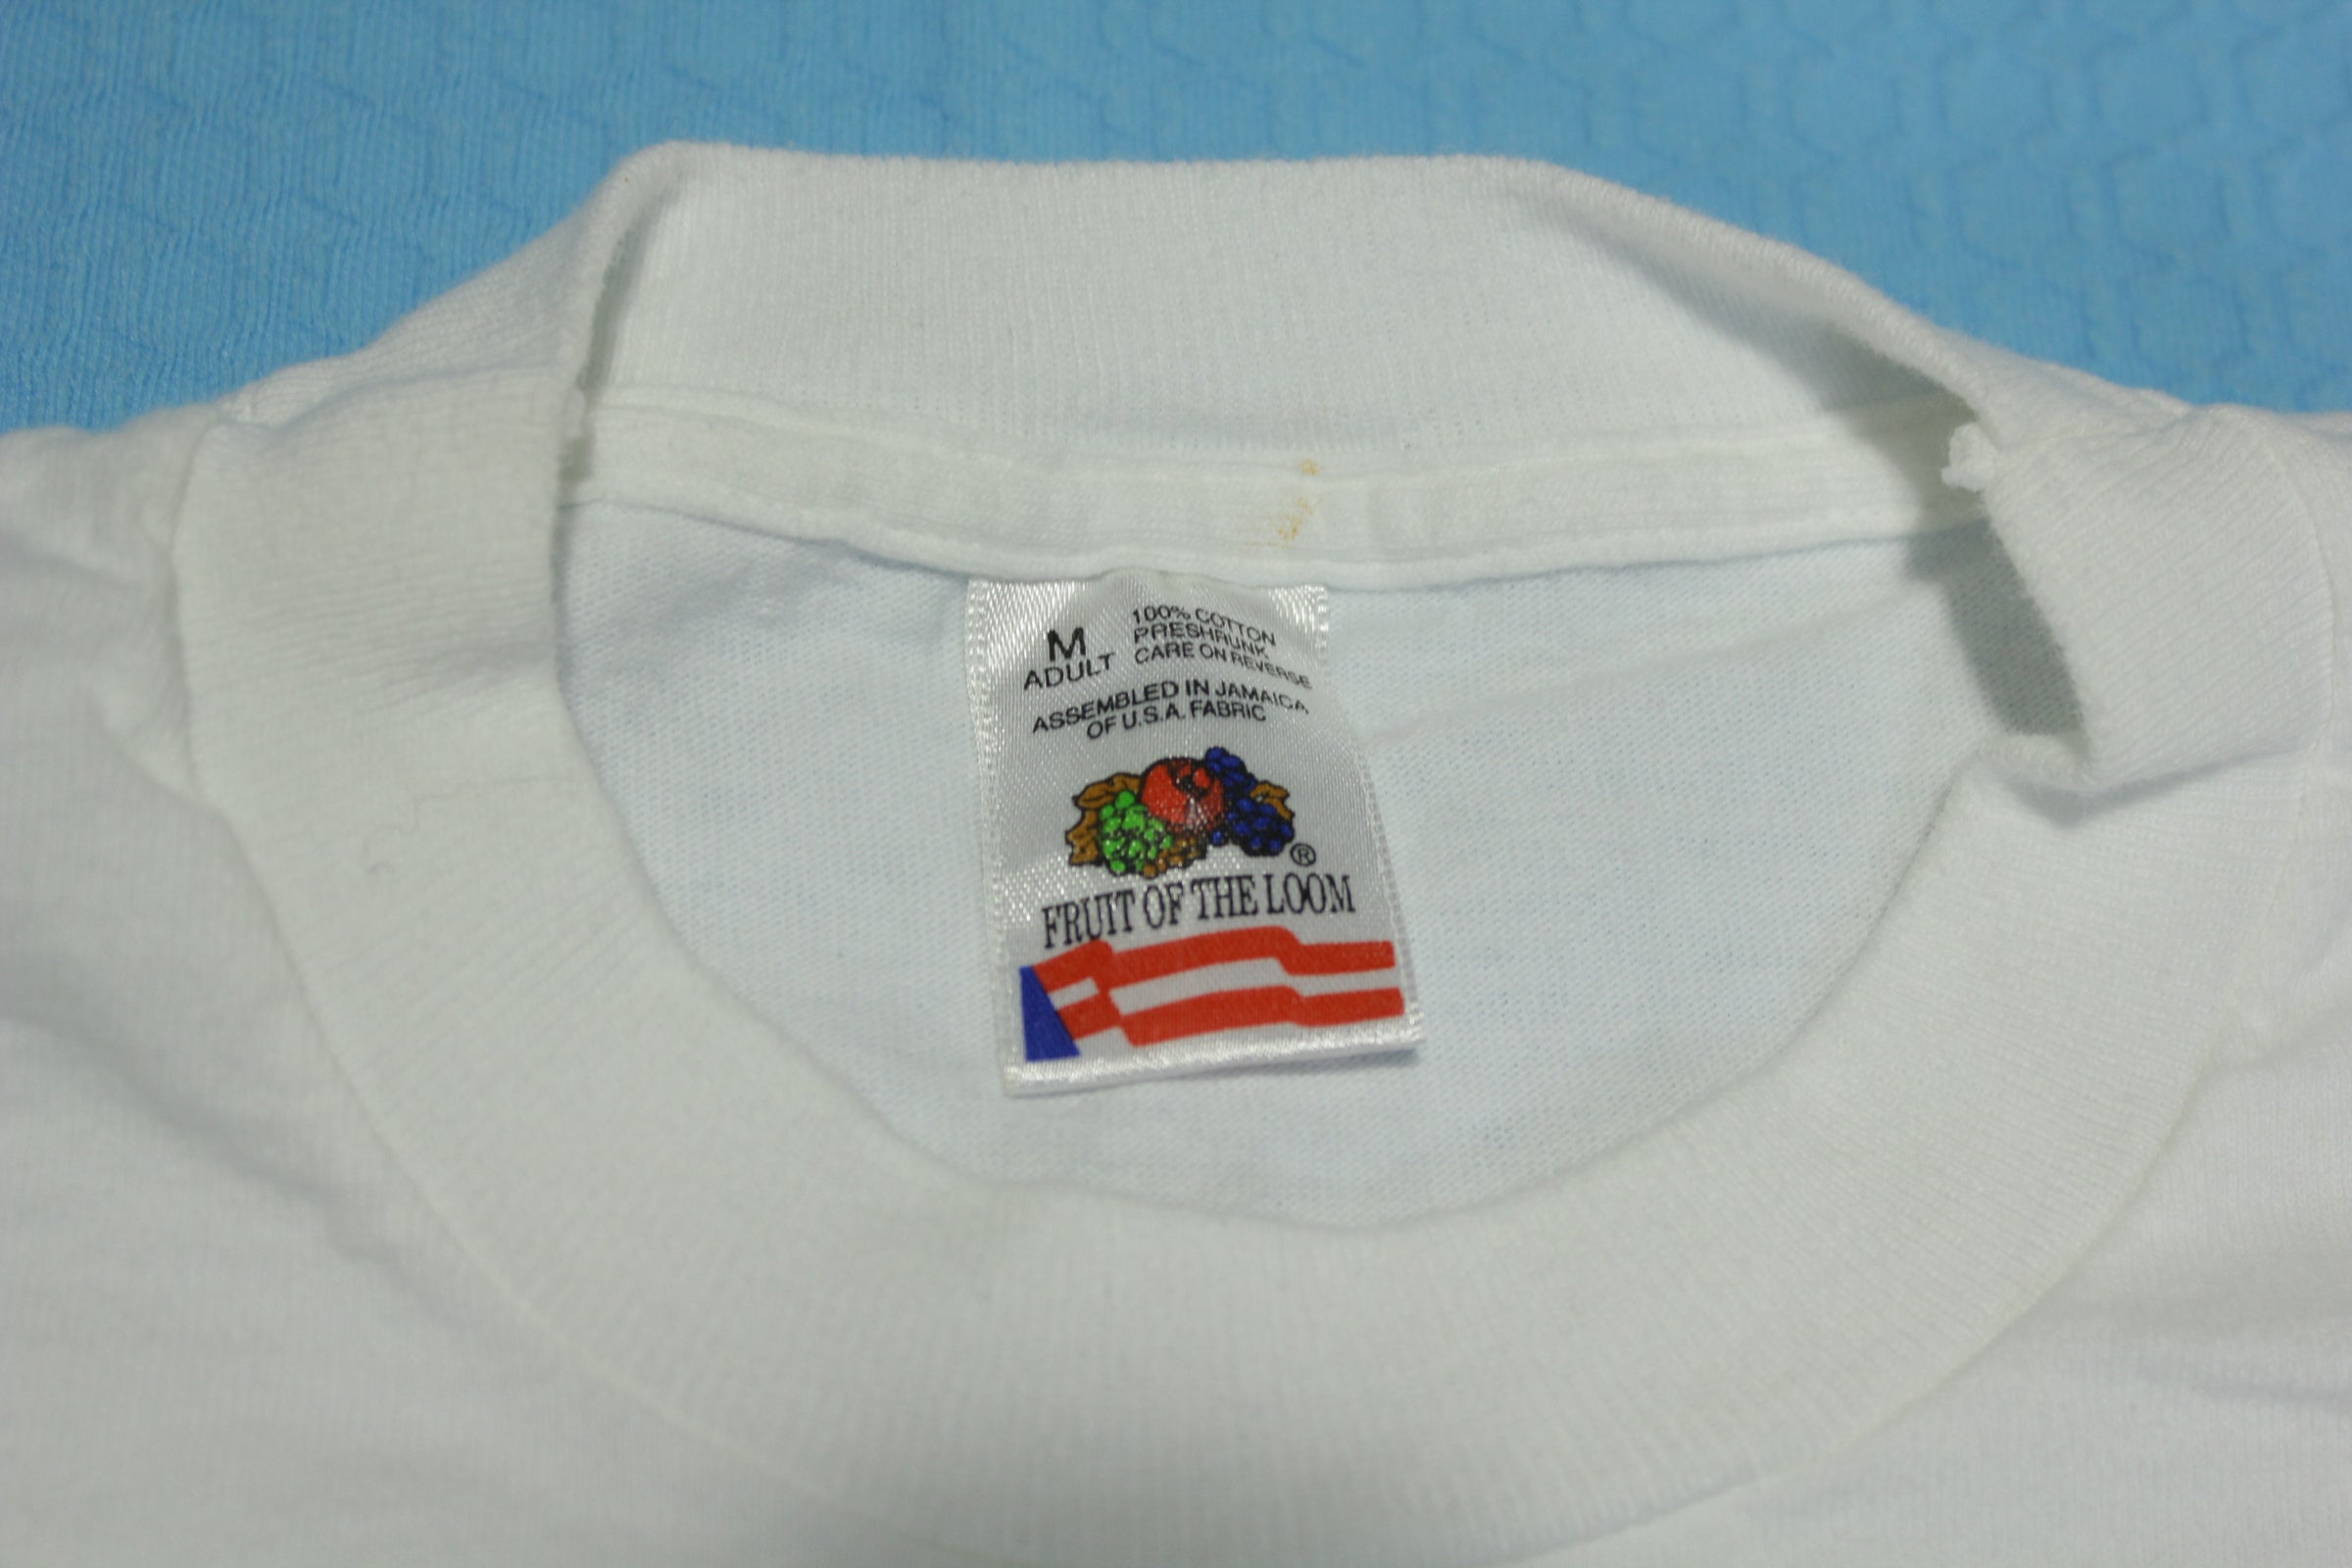 Vintage 1995 NBA Finals Houston Rockets shirt - Guineashirt Premium ™ LLC